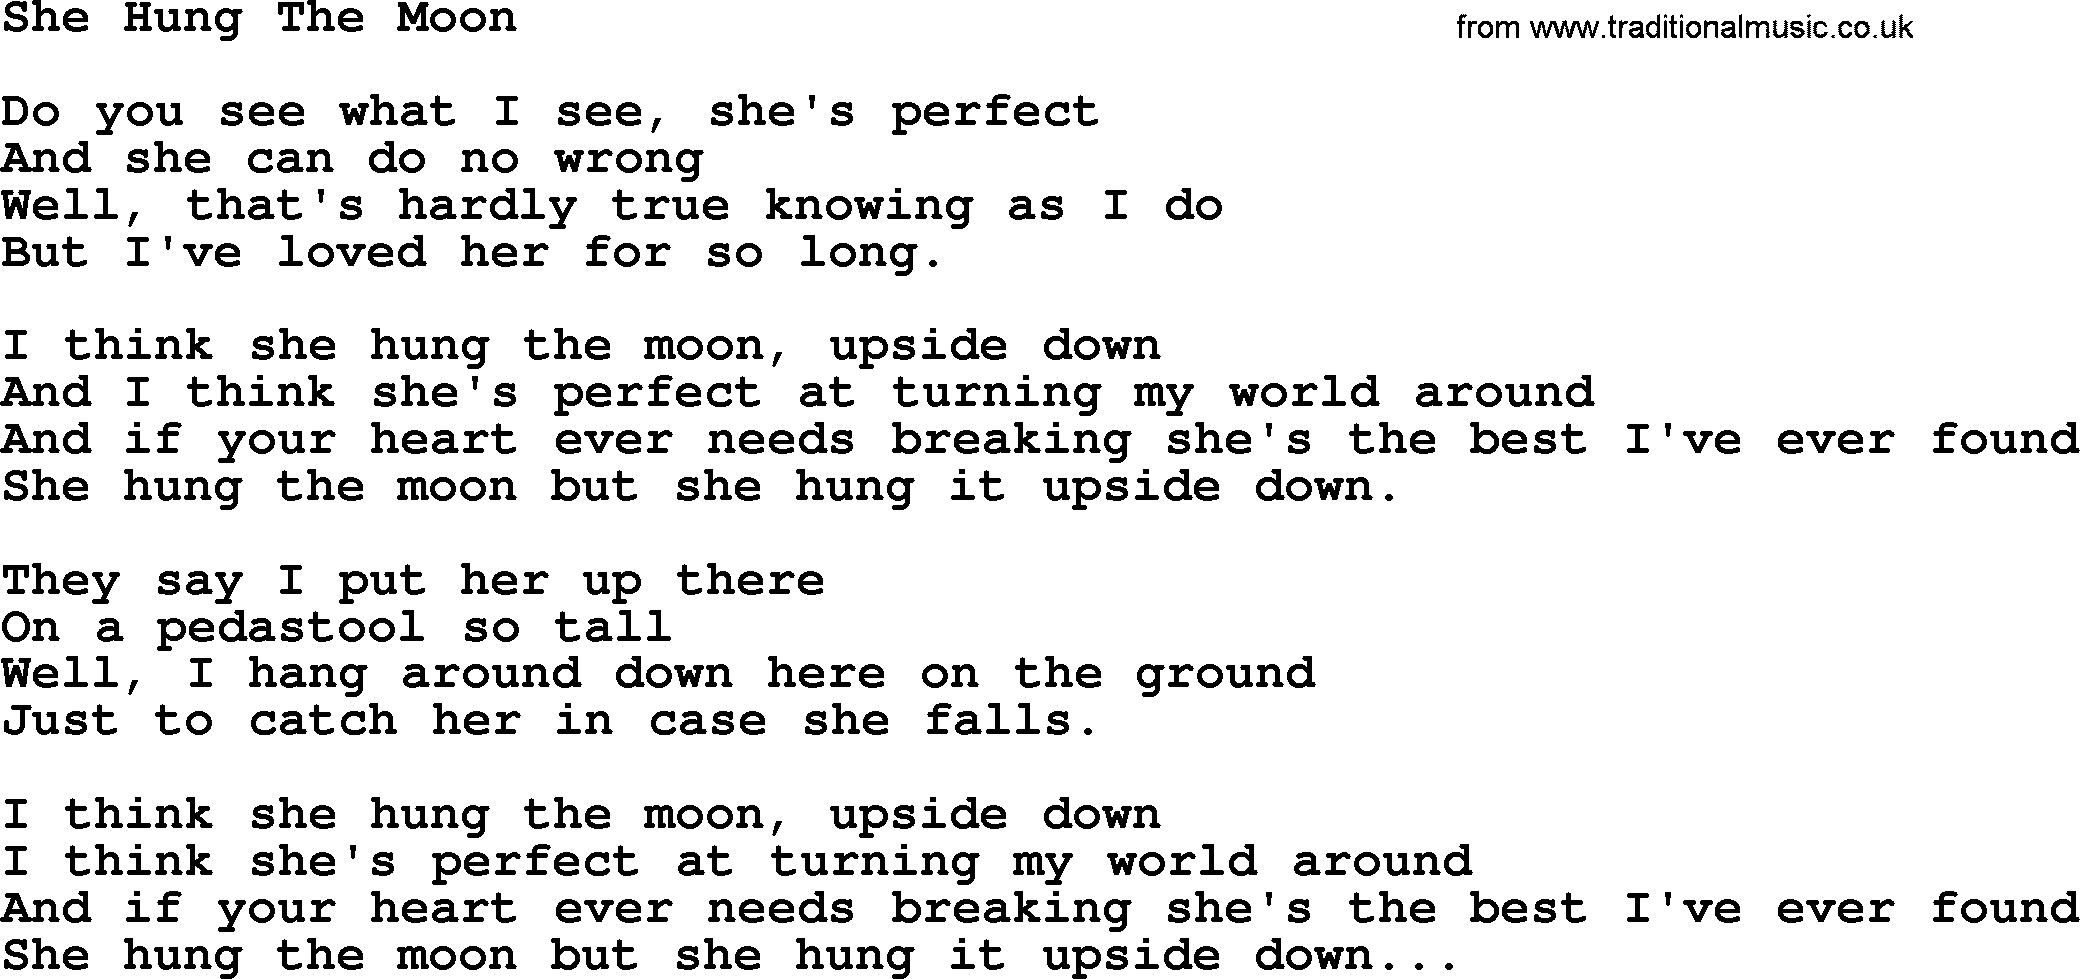 George Jones song: She Hung The Moon, lyrics